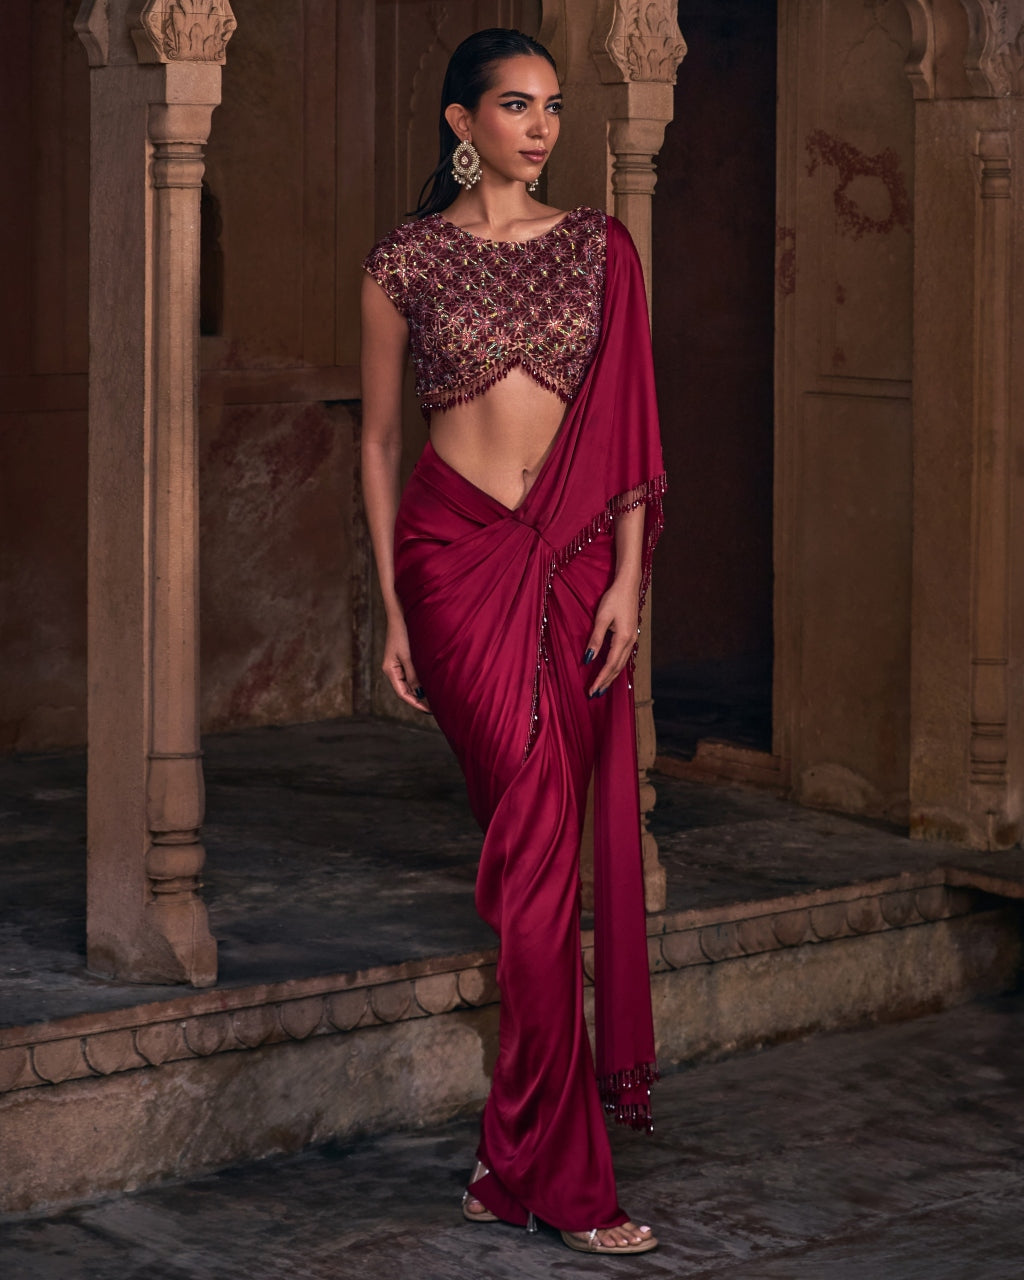 Rachel Maroon Embroidered Sari Set